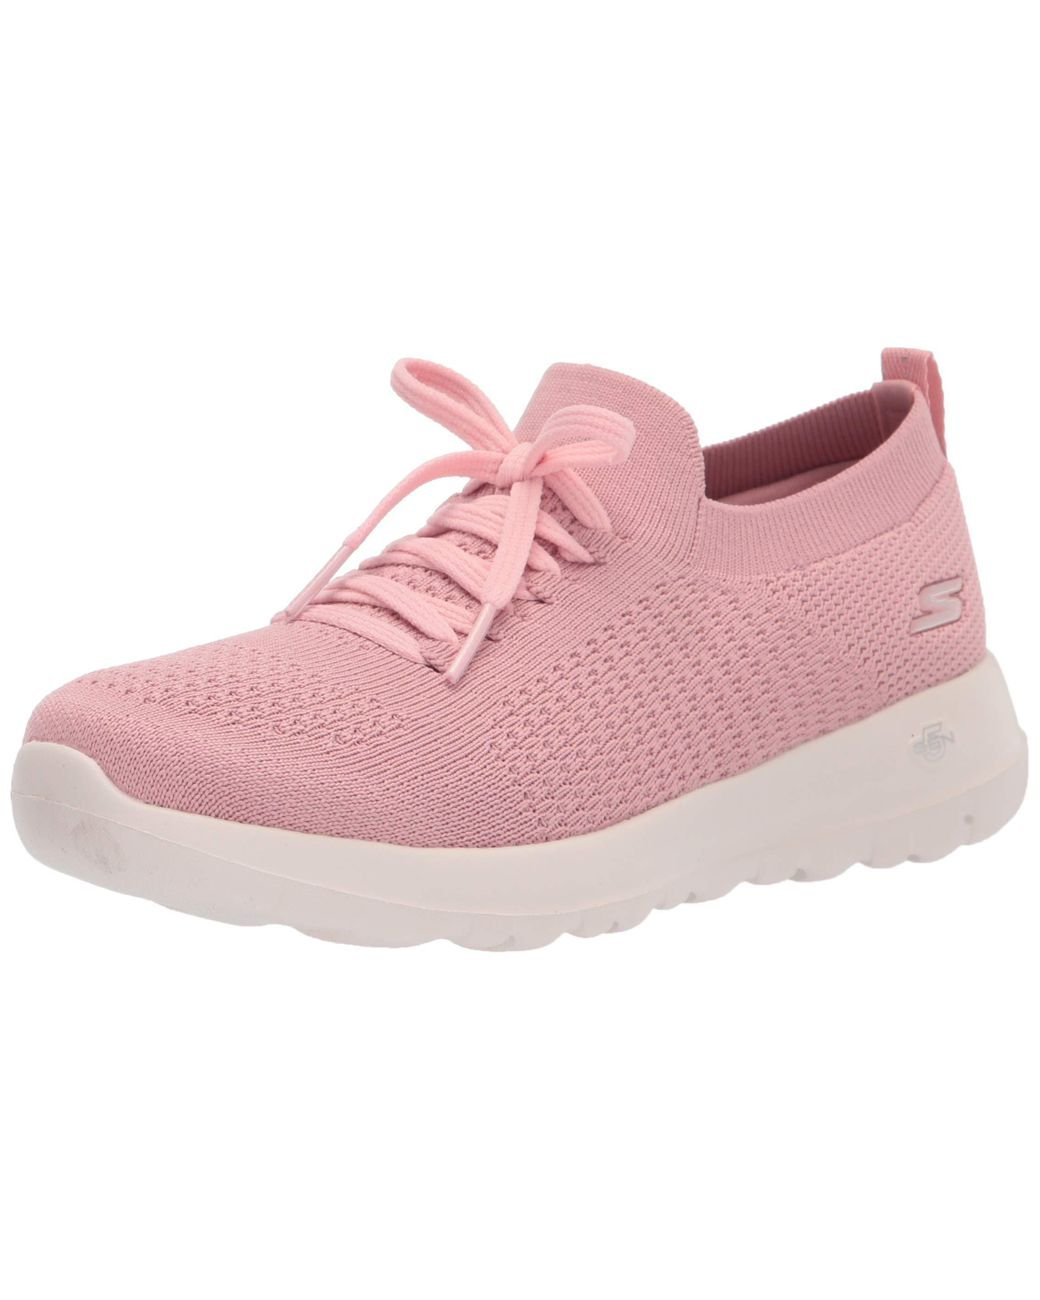 Skechers Womens Go Walk Joy Knit Slip On With Laces Sneaker in Rose (Pink)  | Lyst